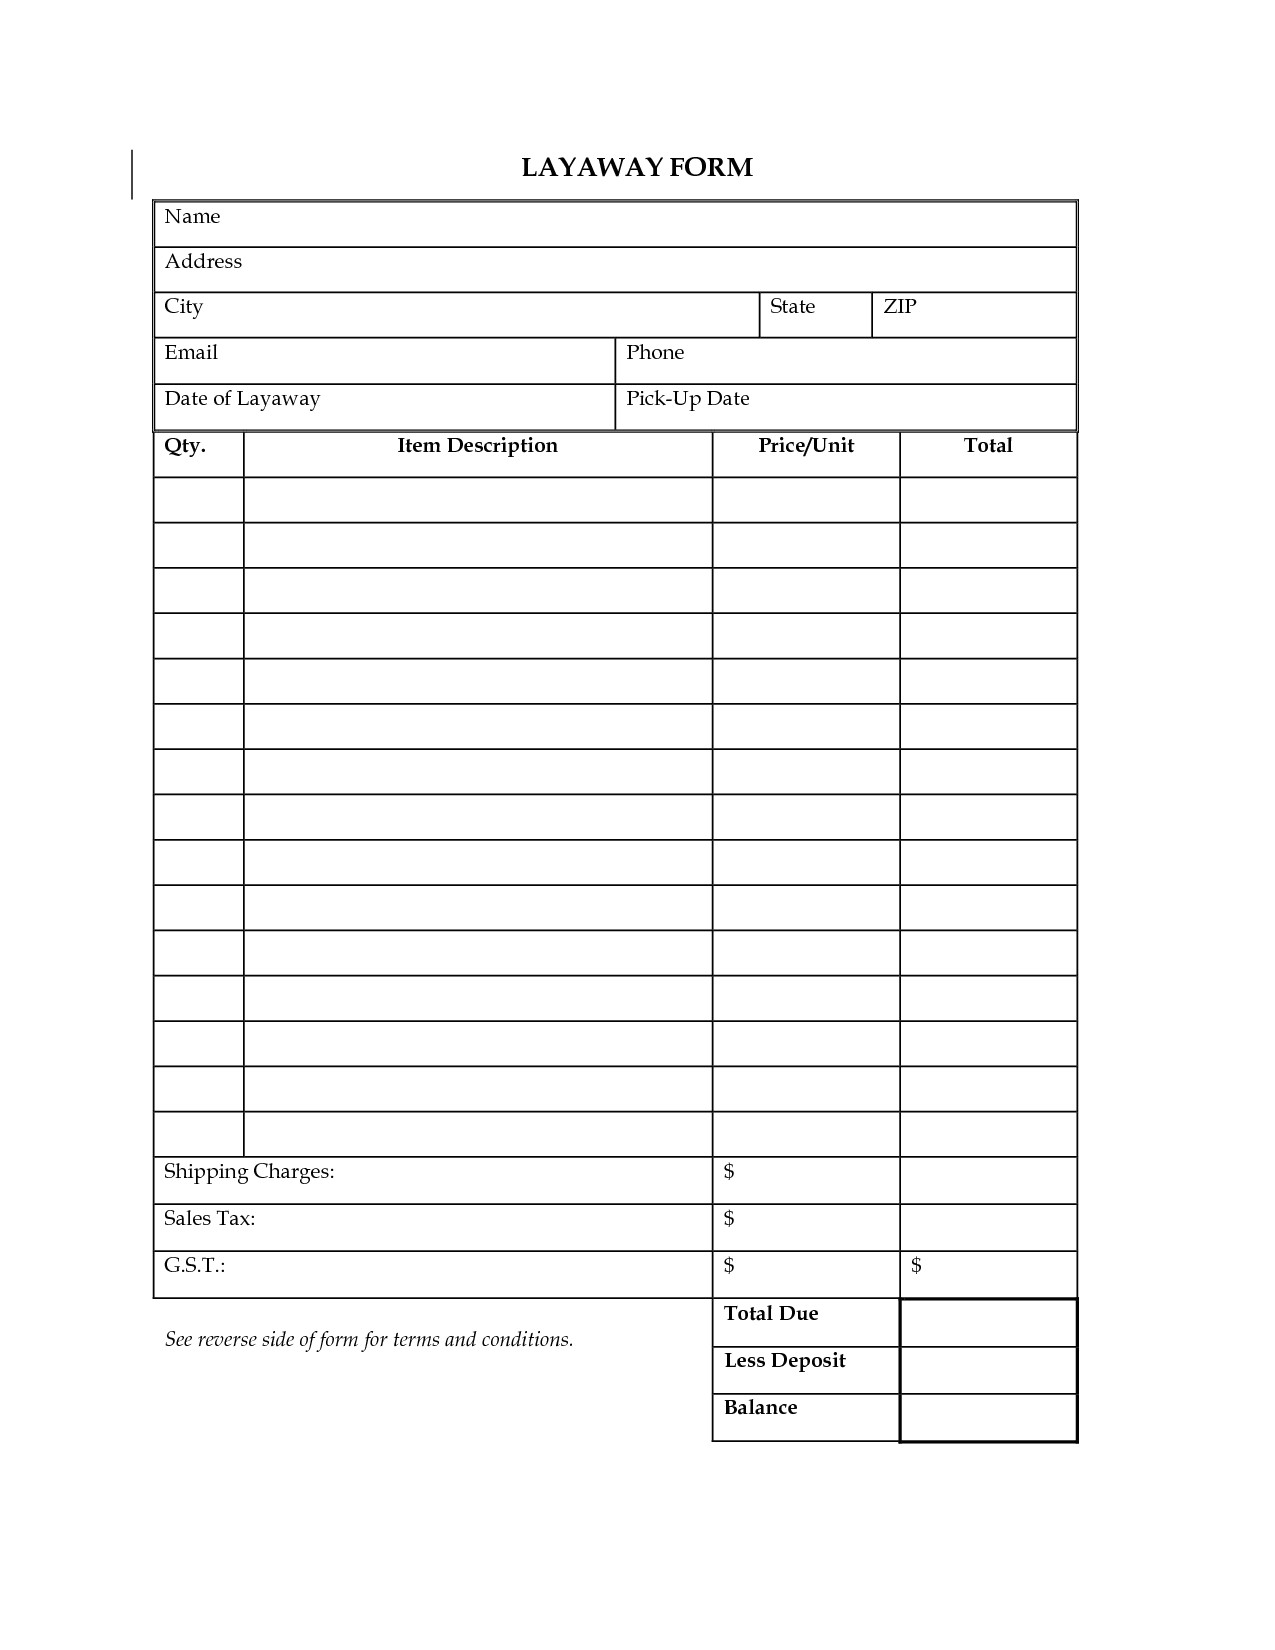 post retail layaway forms printable 252350